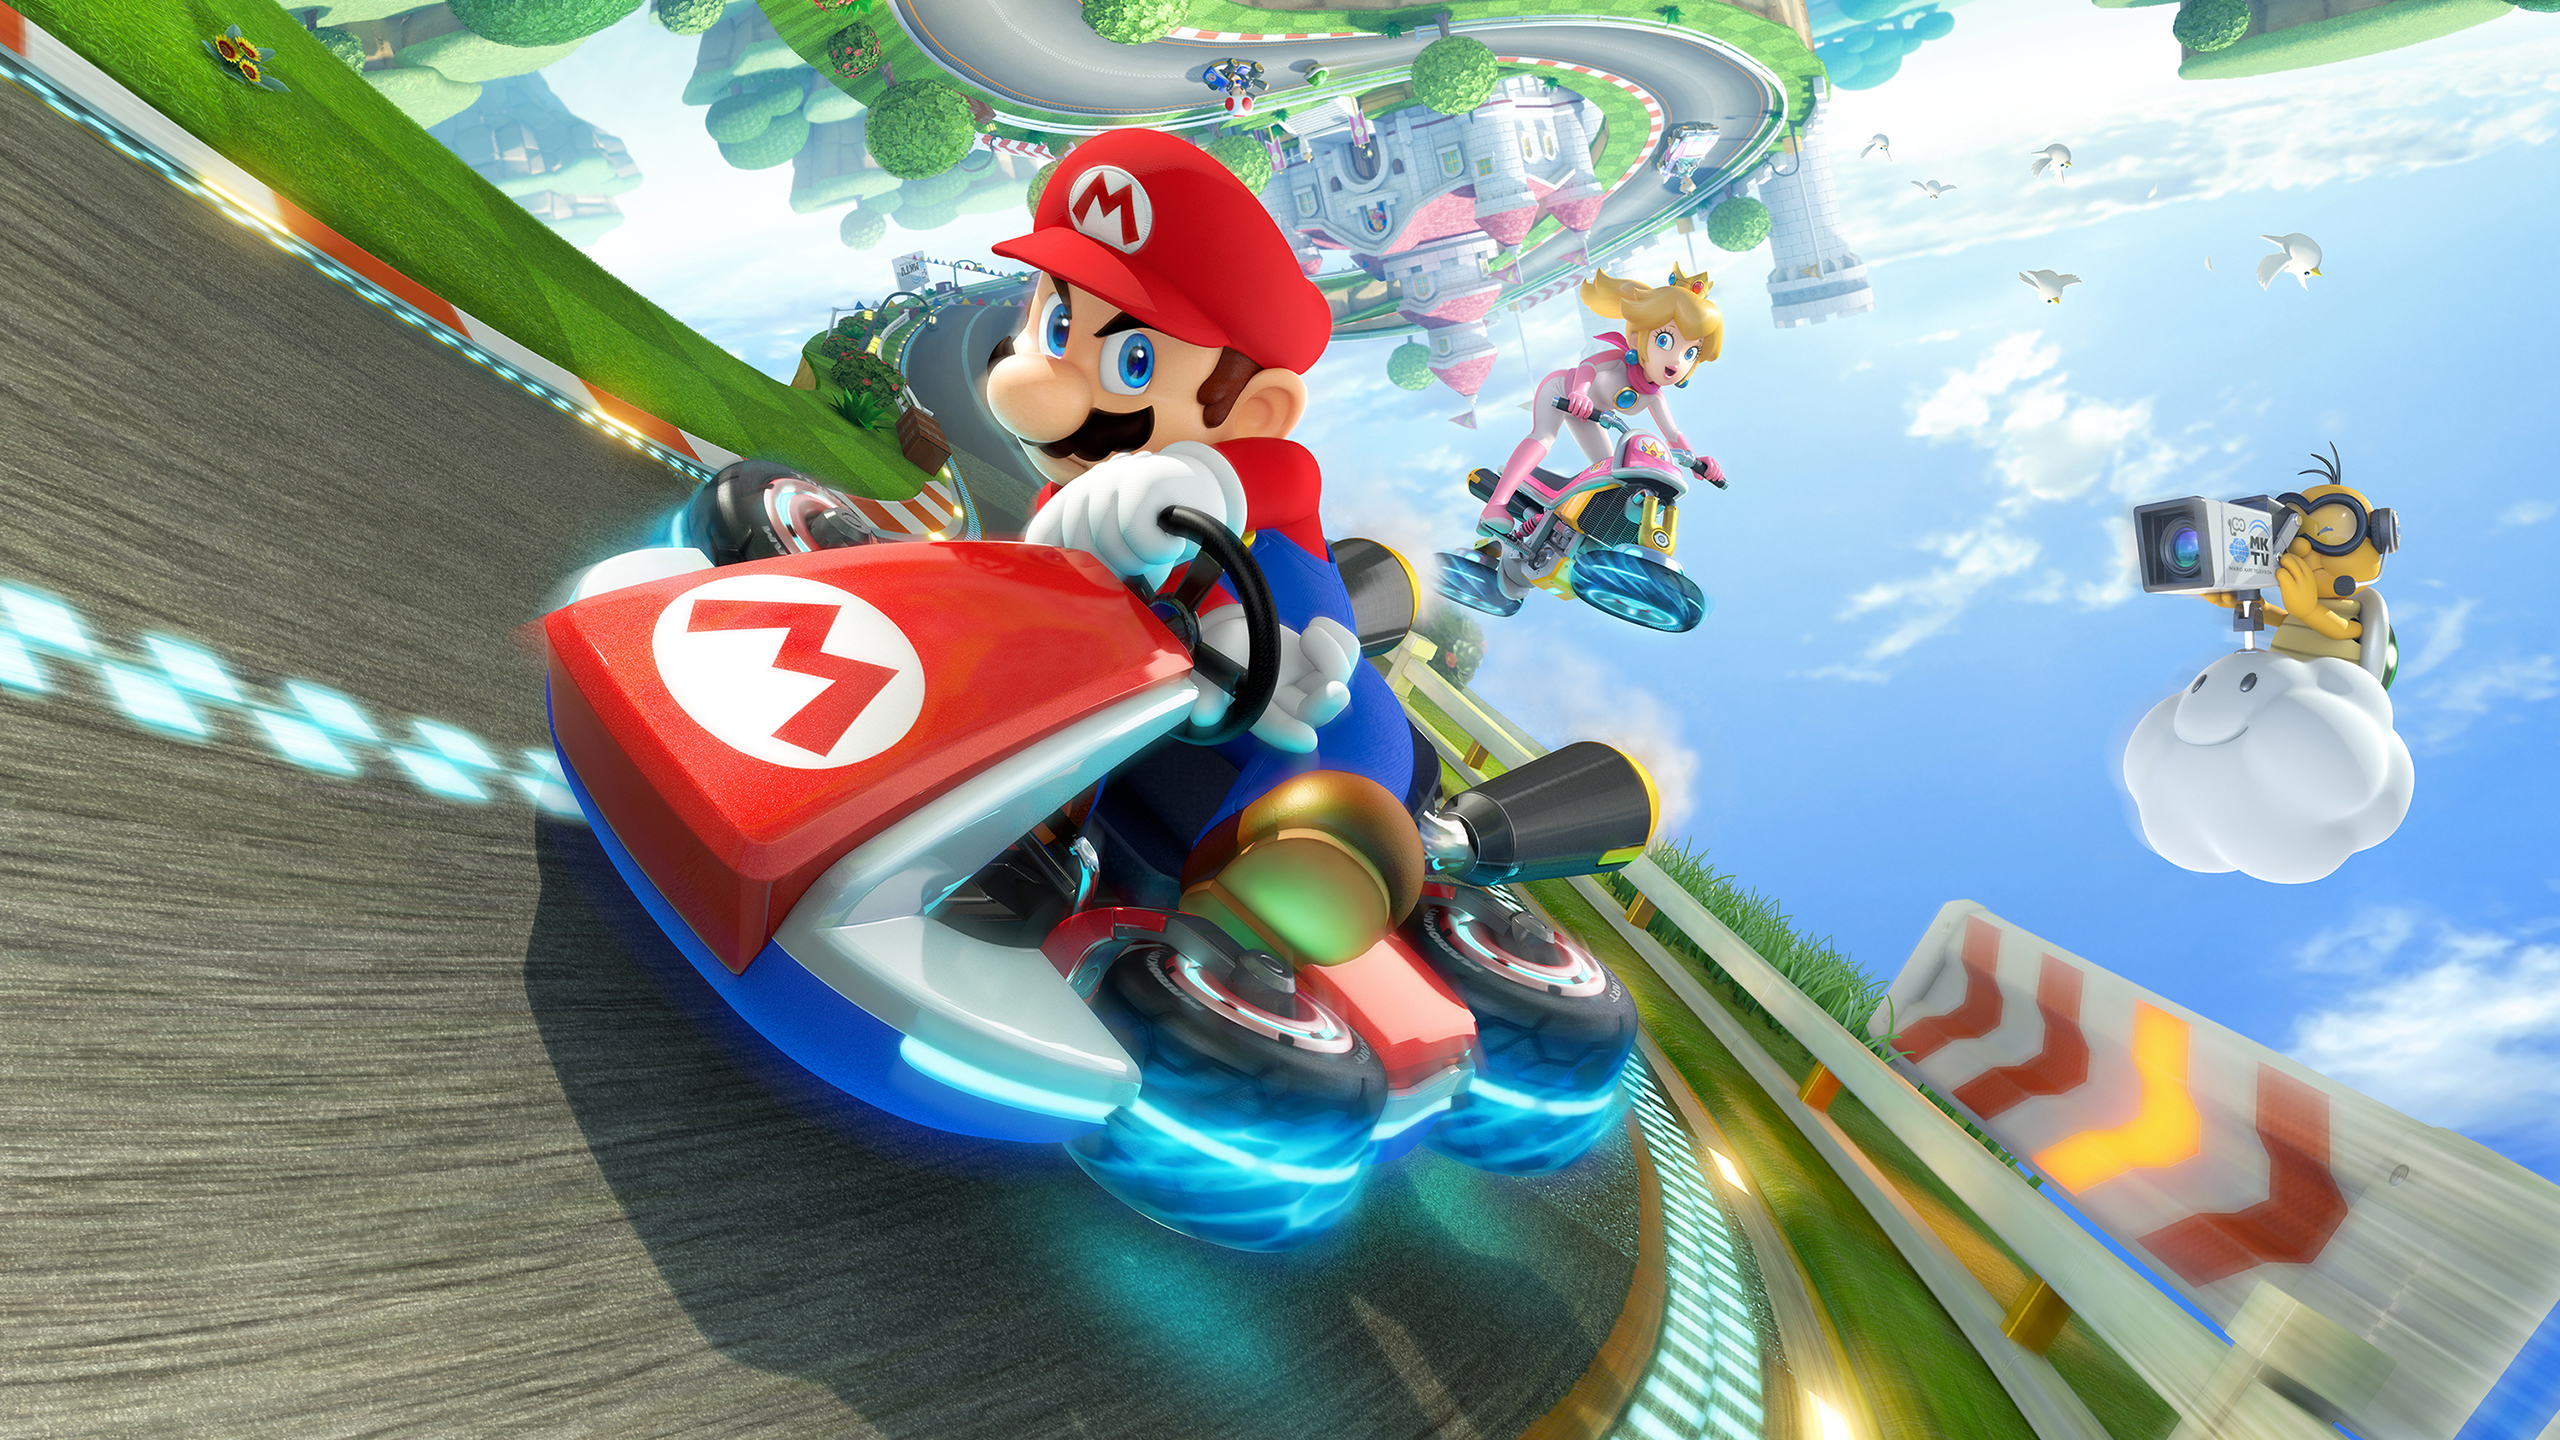 General 2560x1440 Mario Bros. Mario Kart Princess Peach race tracks Nintendo motion blur video games